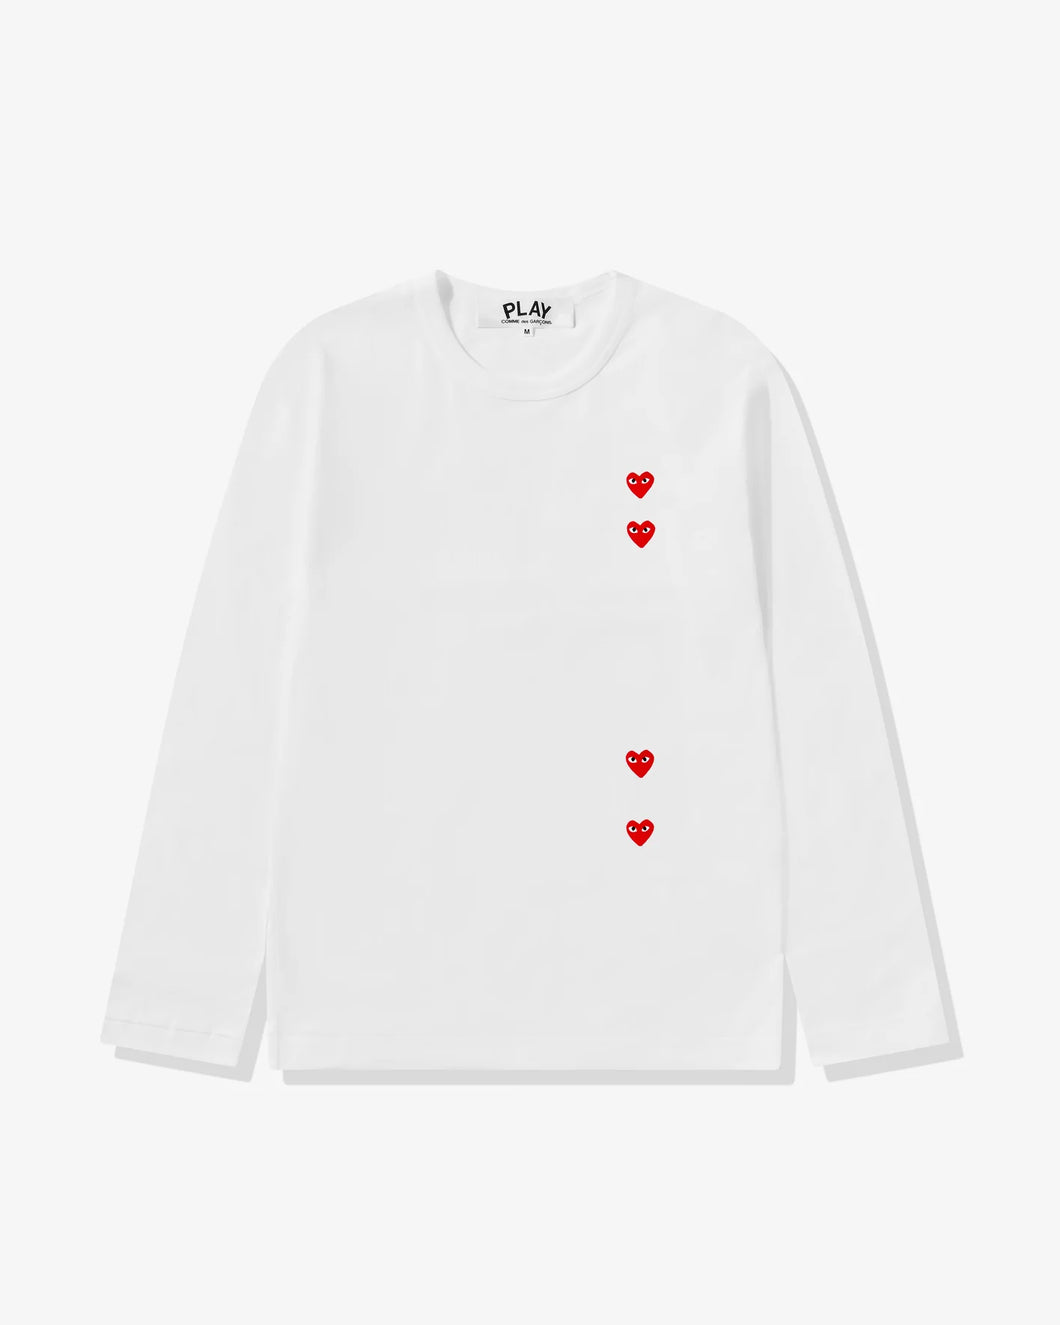 PLAY Comme des Garçons Multi Red Heart Longsleeve T-Shirt (White)